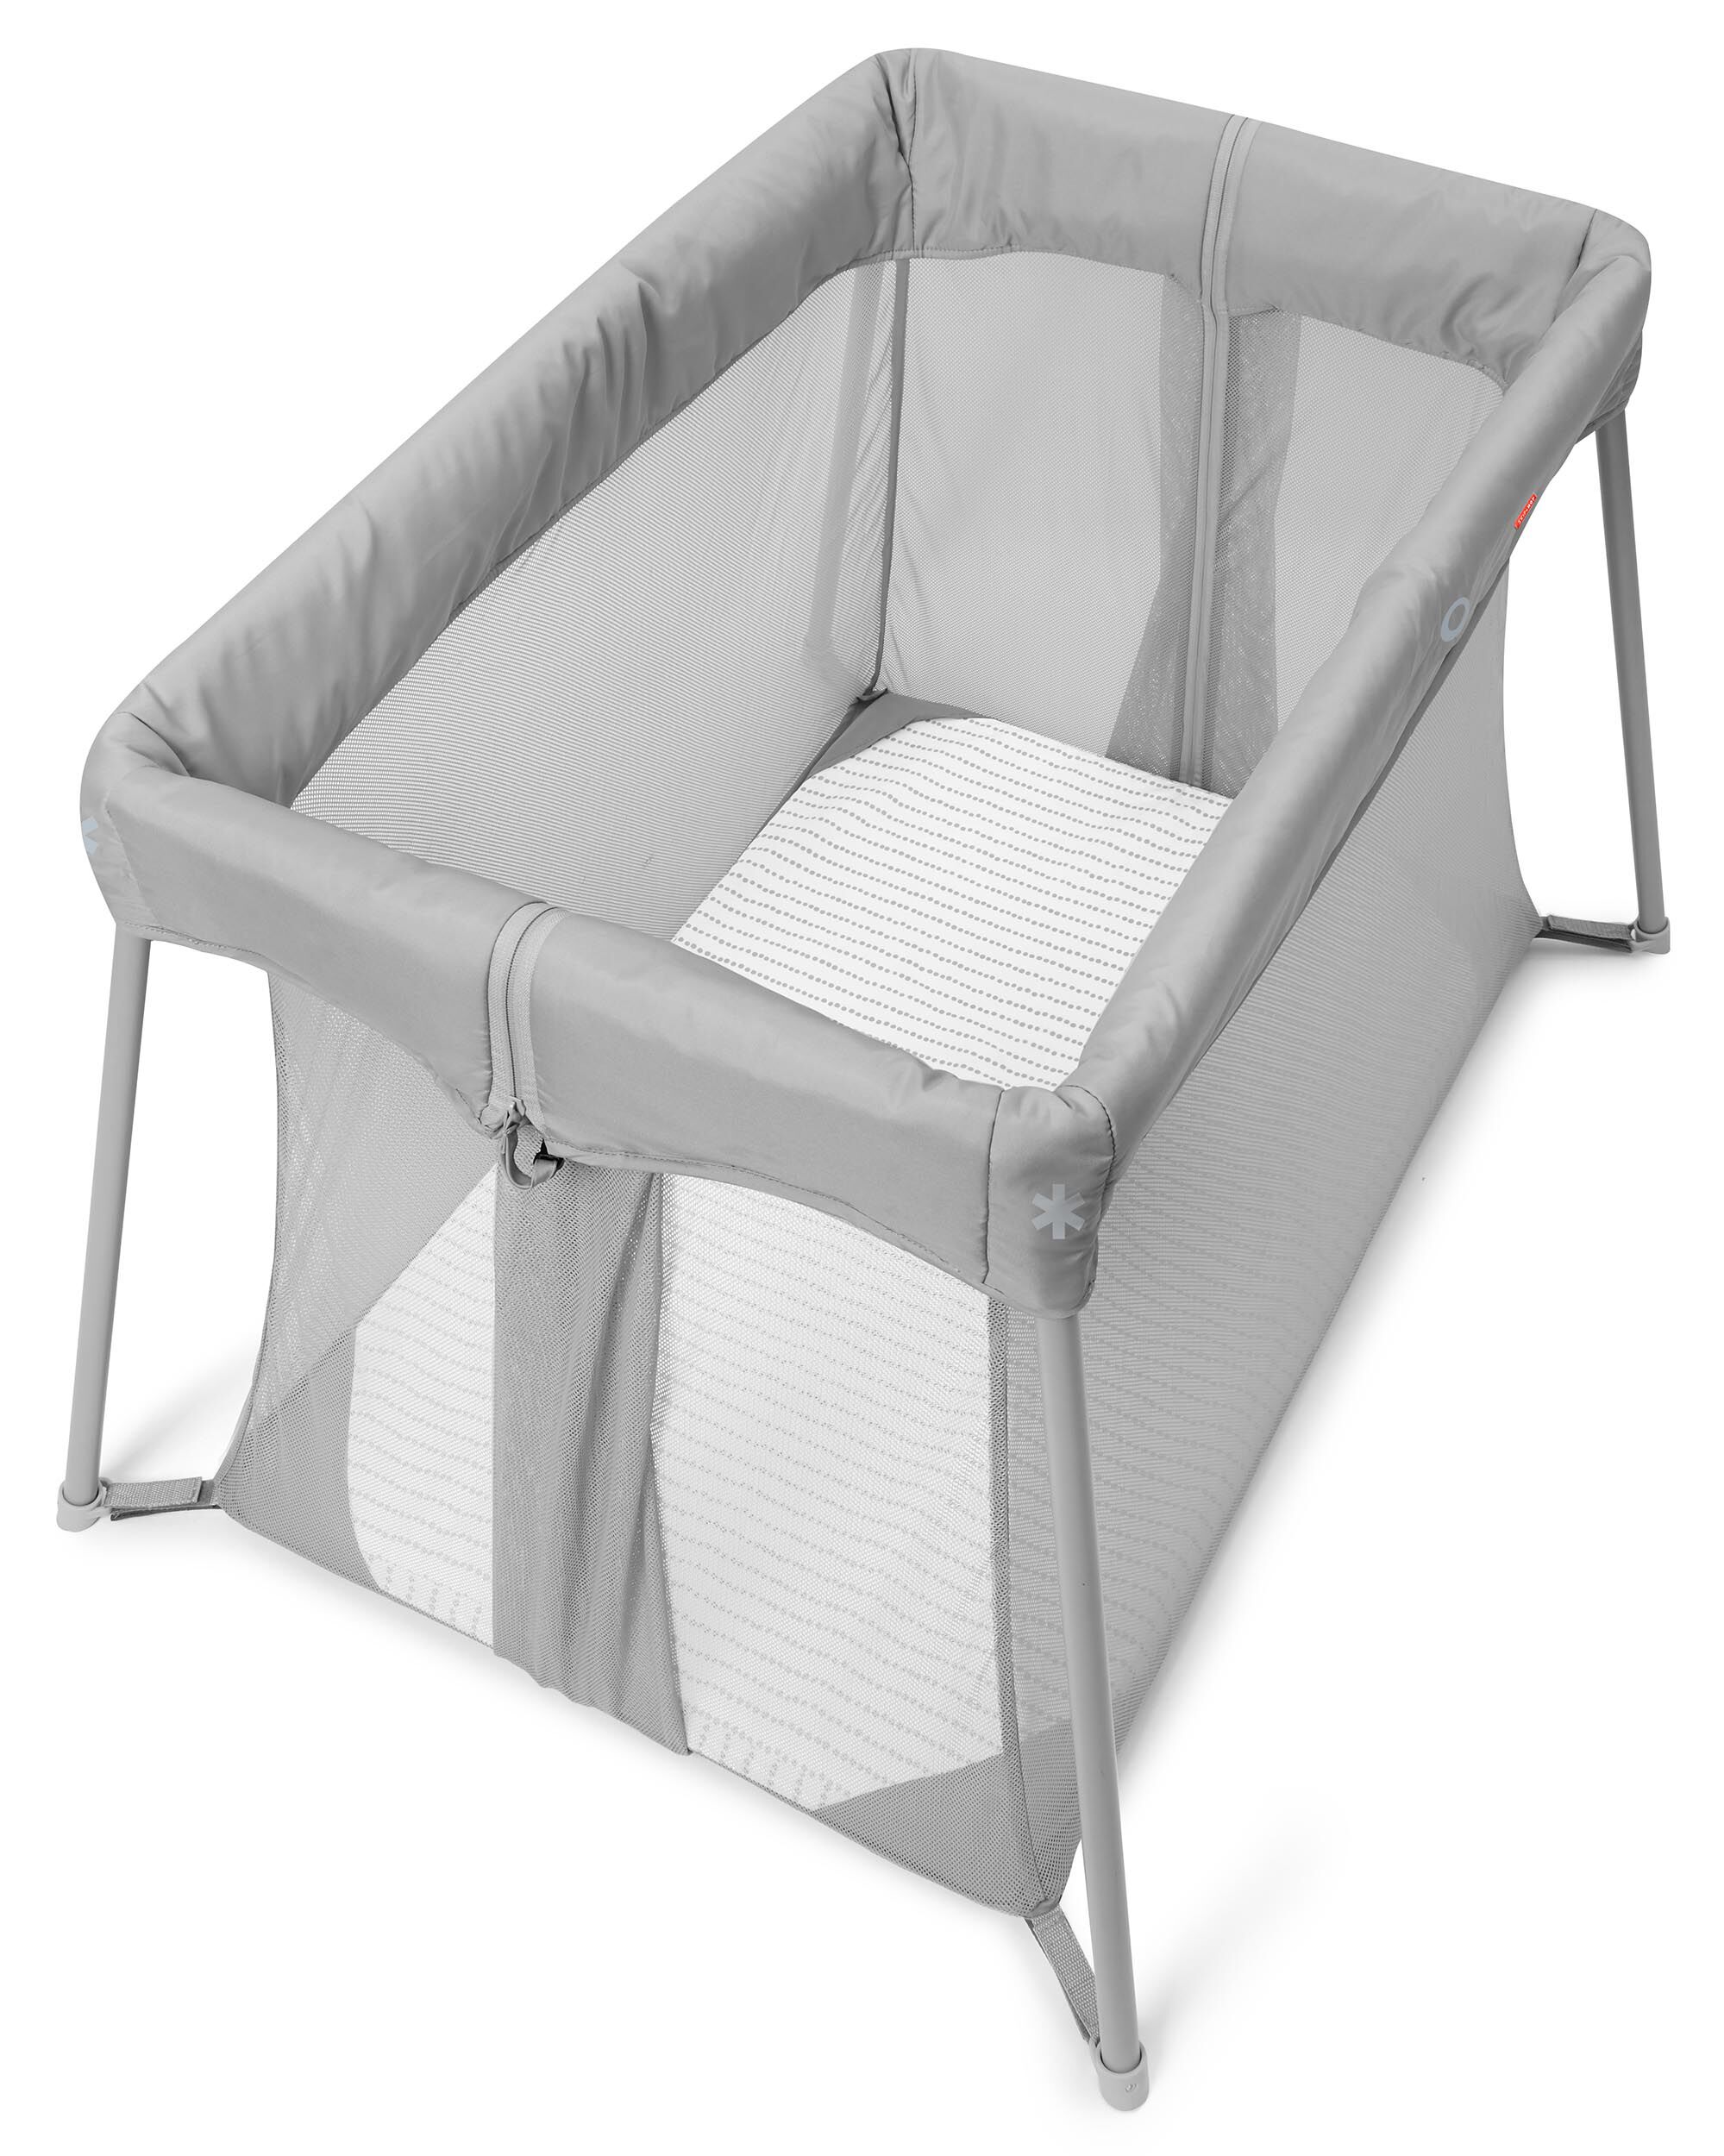 enclosed bassinet